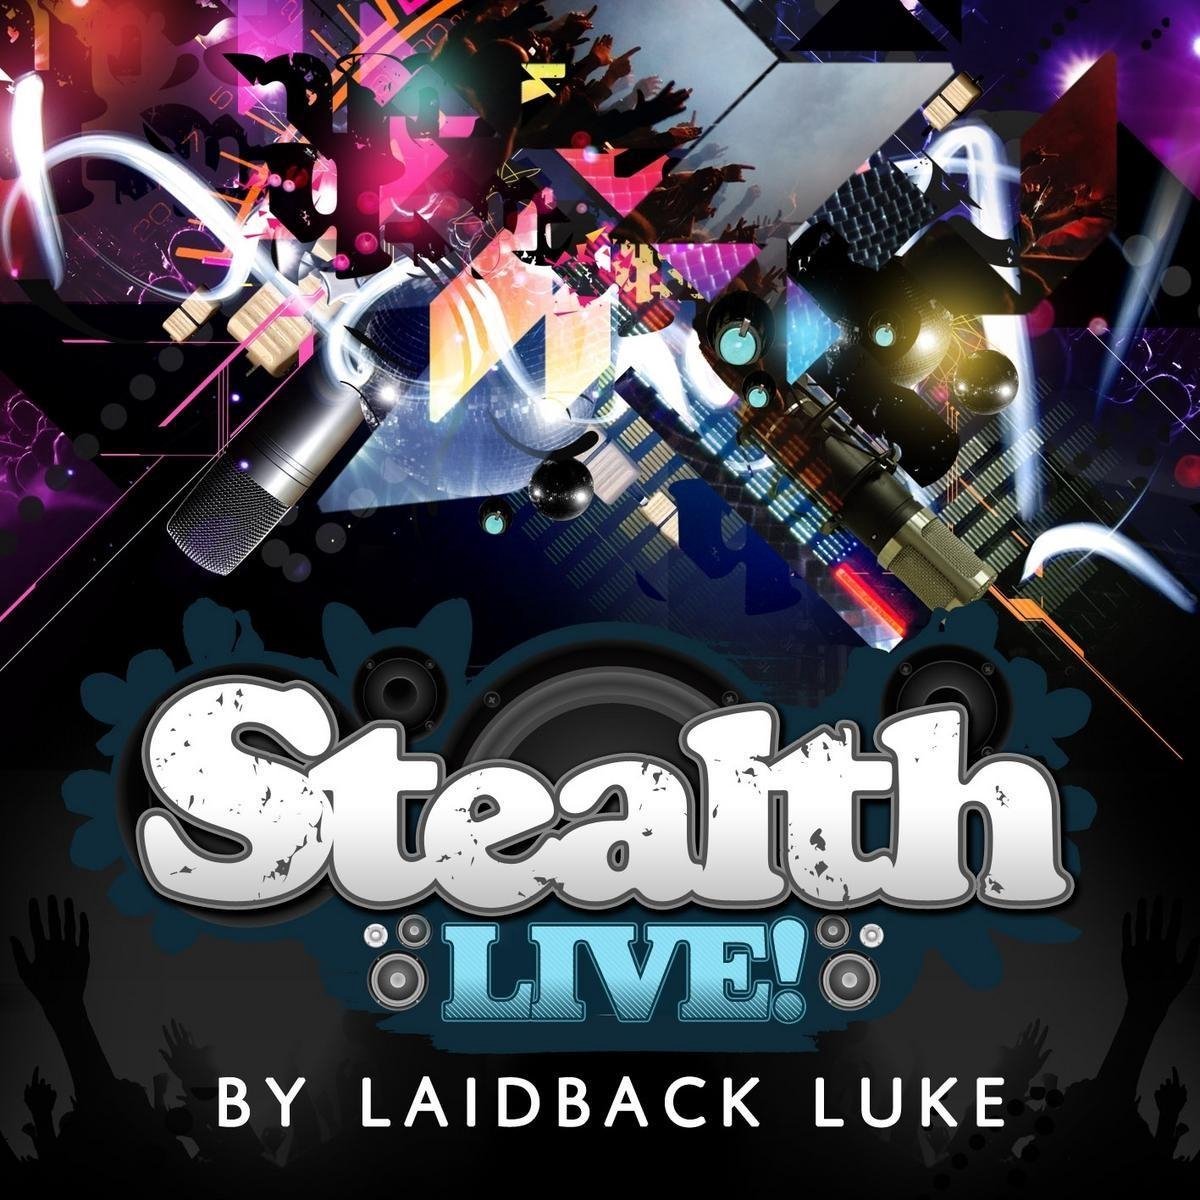 Laidback Luke - Stealth Live! (CD) - Laidback Luke